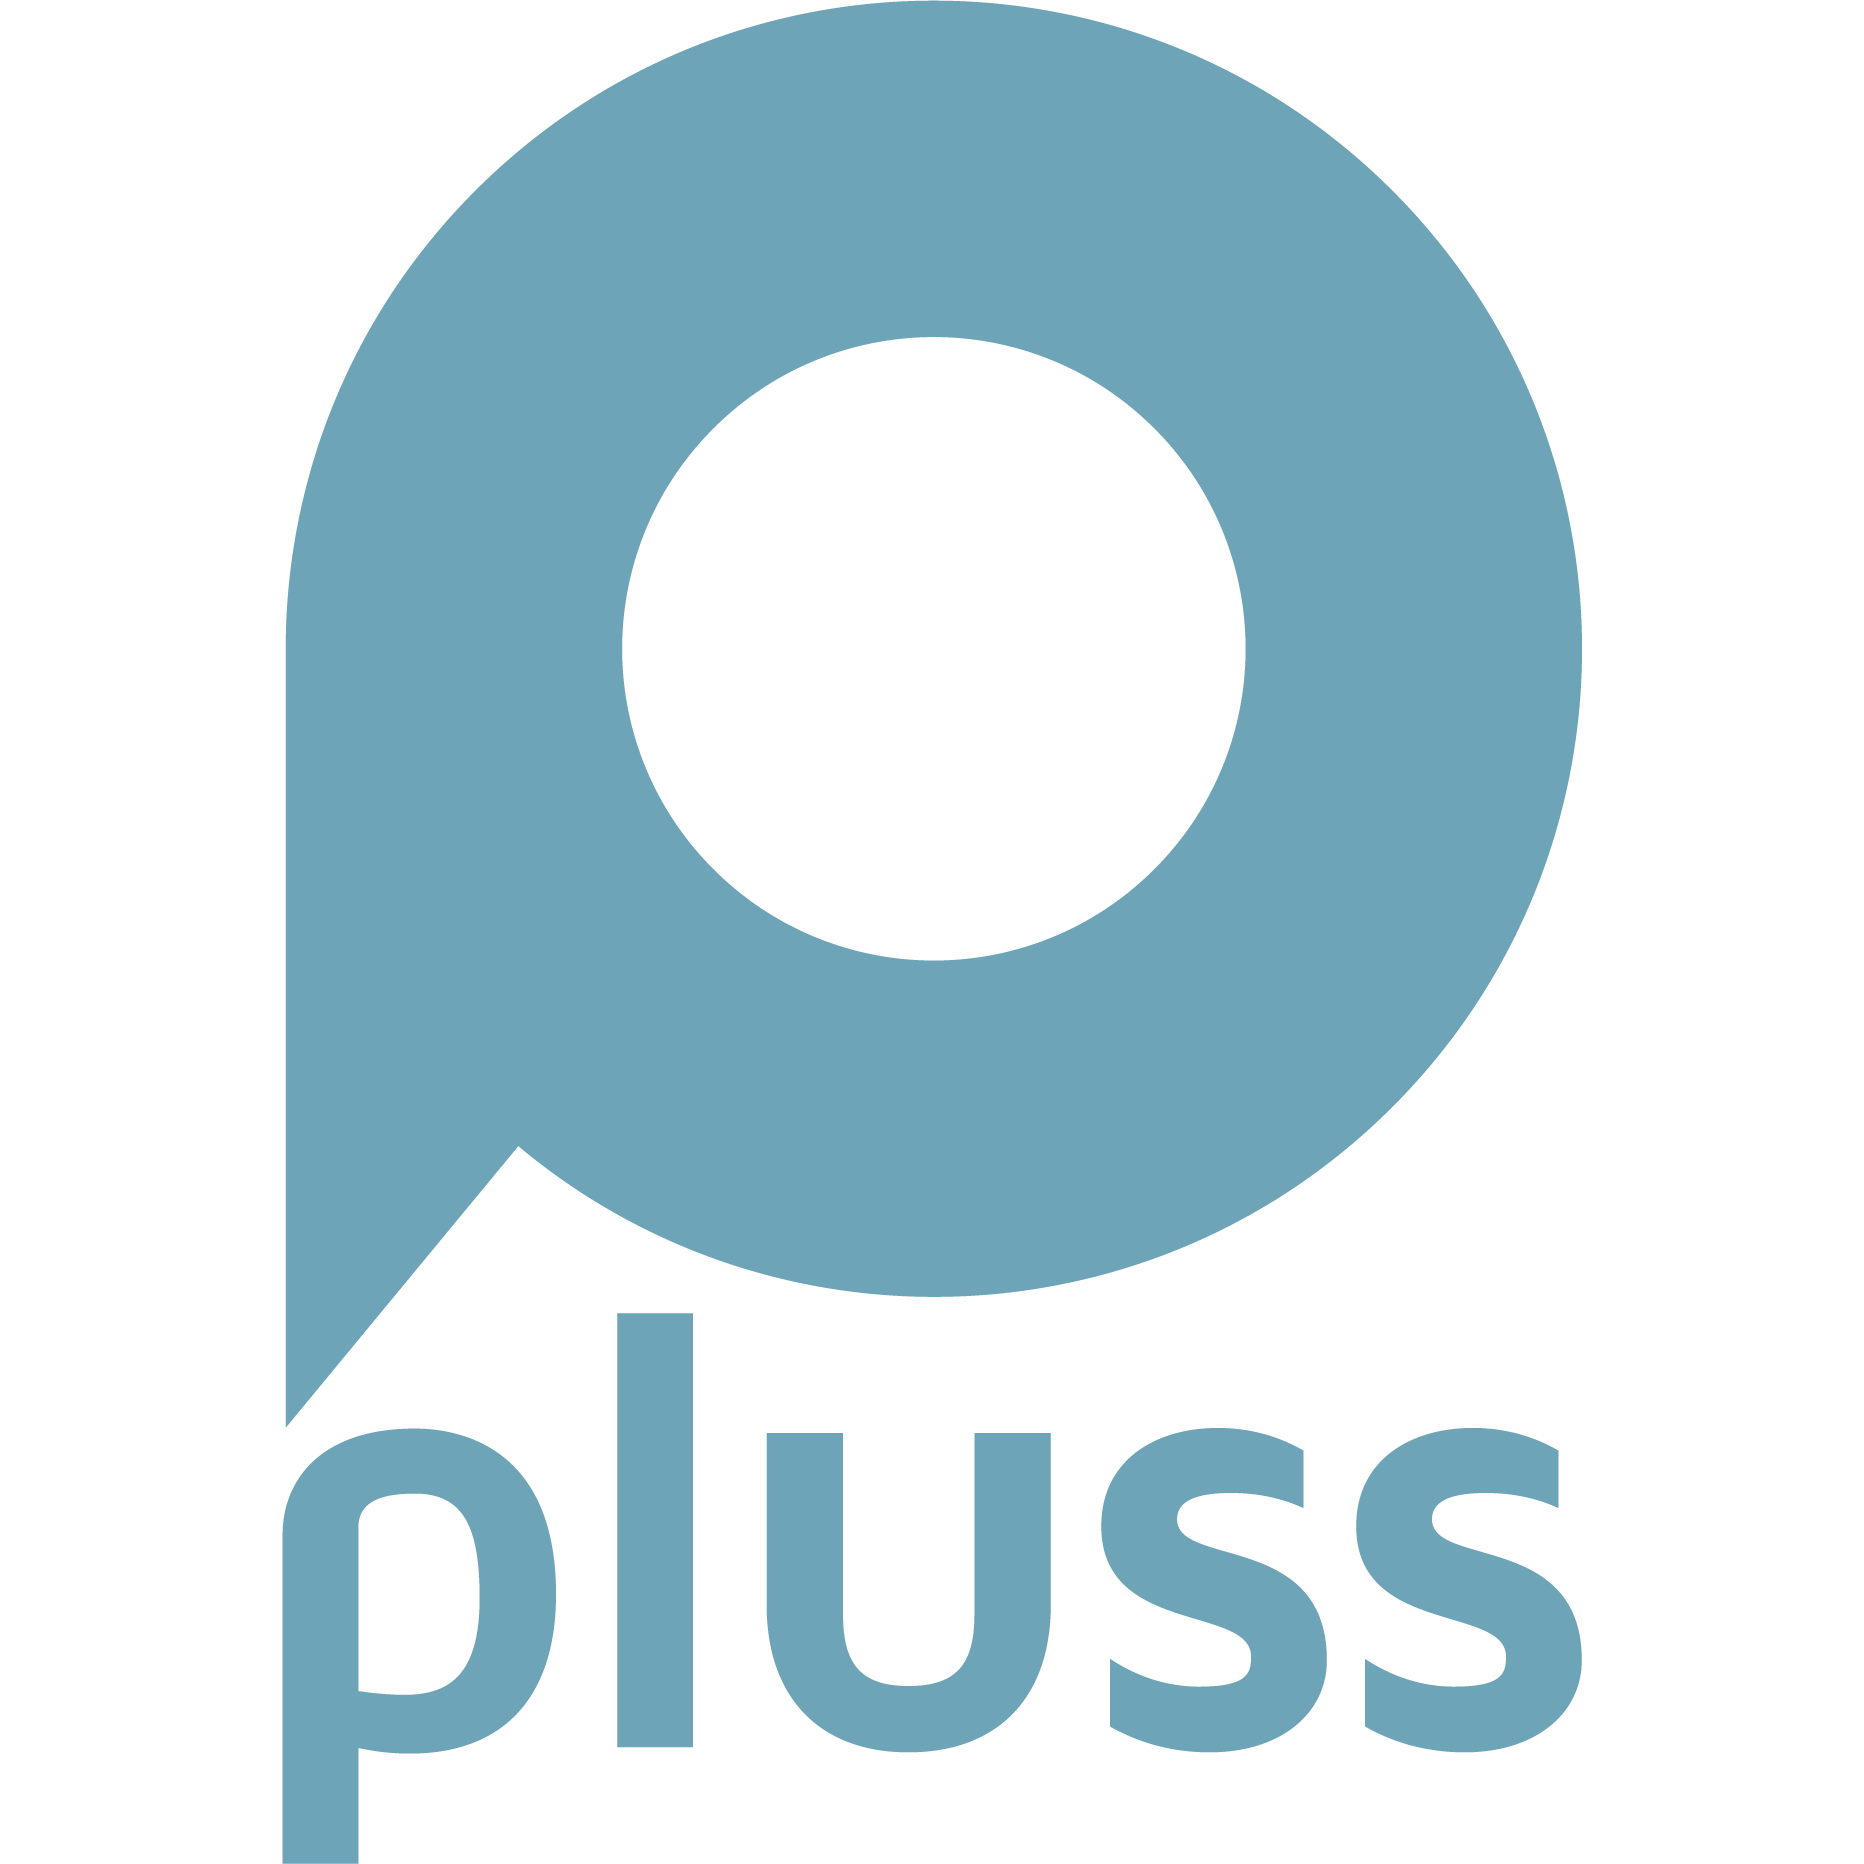 pluss Köln - Care People (Medizin/Pflege) & Bildung und Soziales in Köln - Logo